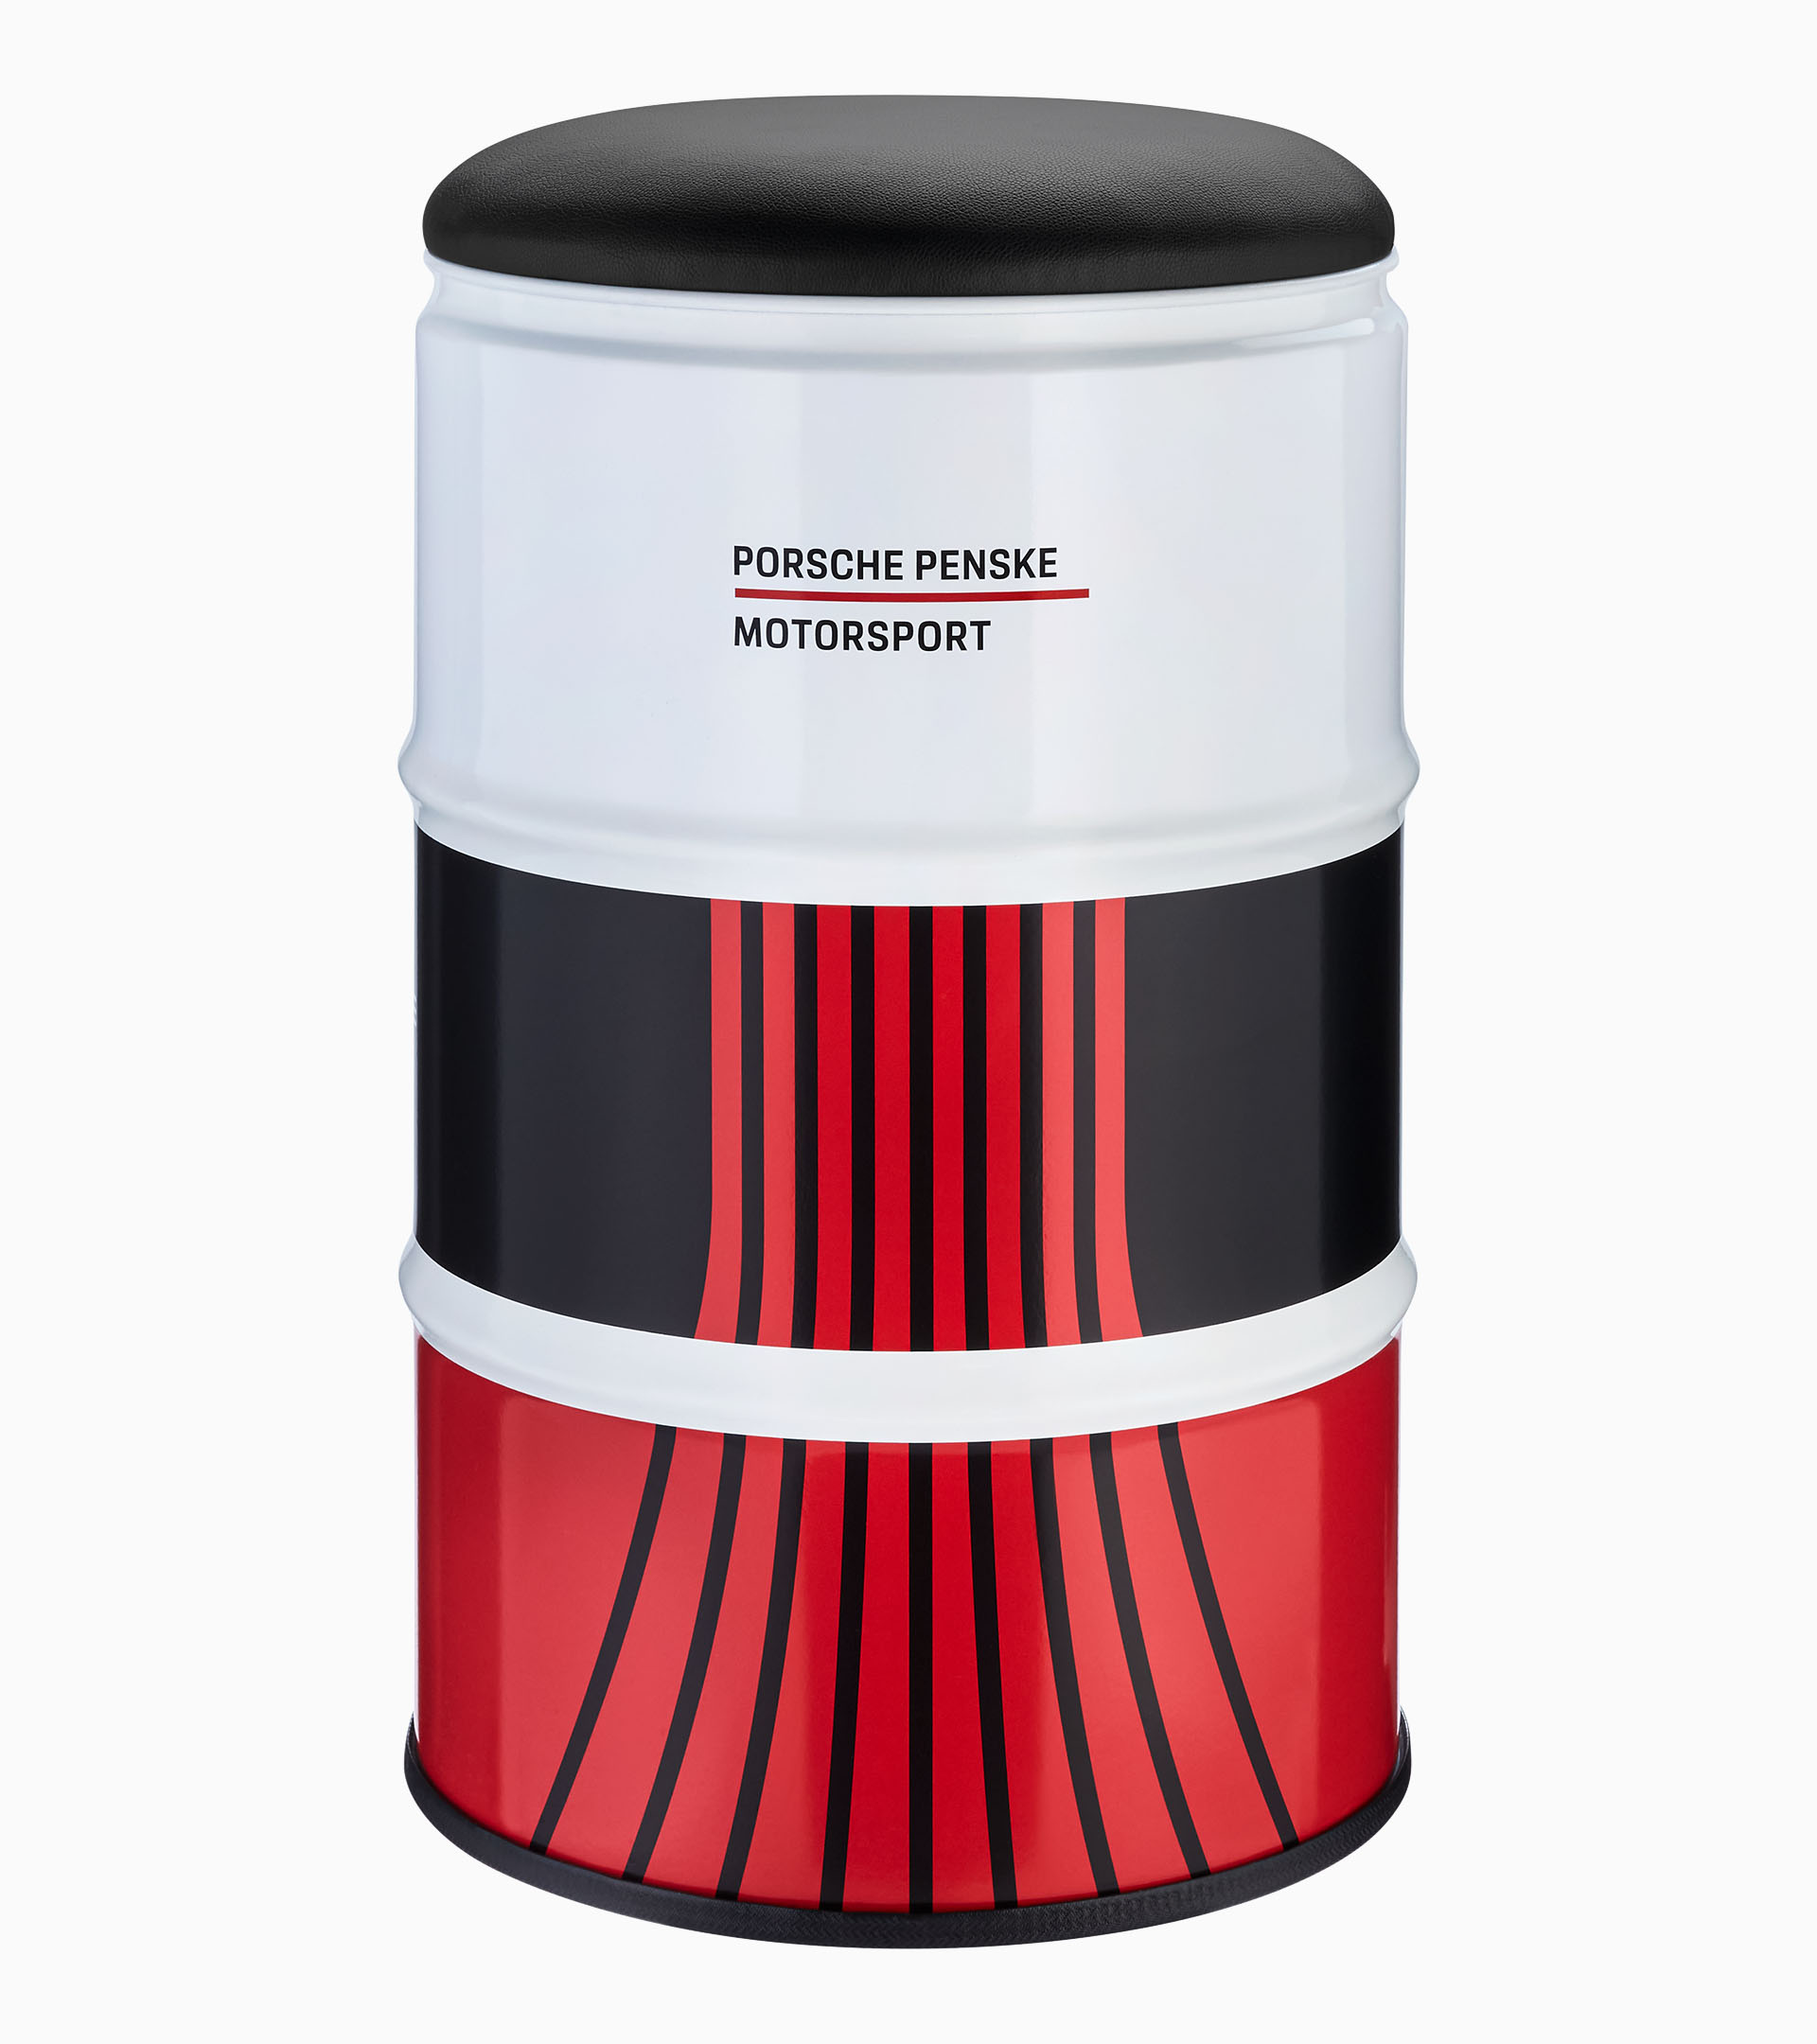 Porsche Penske Motorsport - Barrel Seat zoom